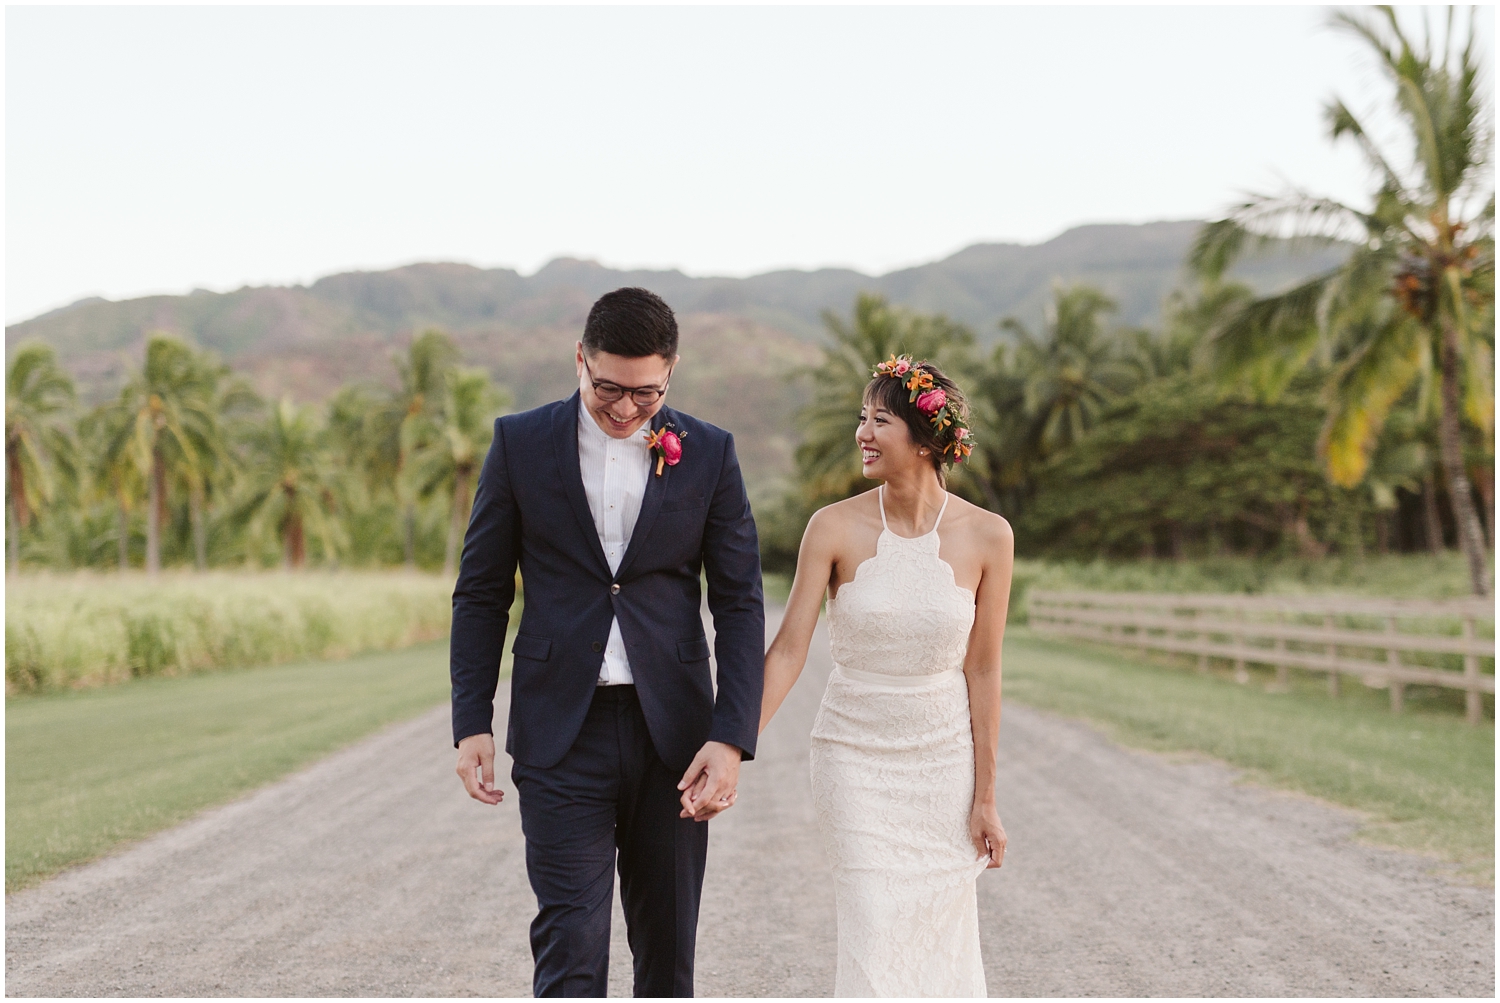 Dillingham Ranch Wedding, Tropical Hawaii Wedding Ceremony, Oahu Hawaii Wedding Ceremony, Hawaii Elopement